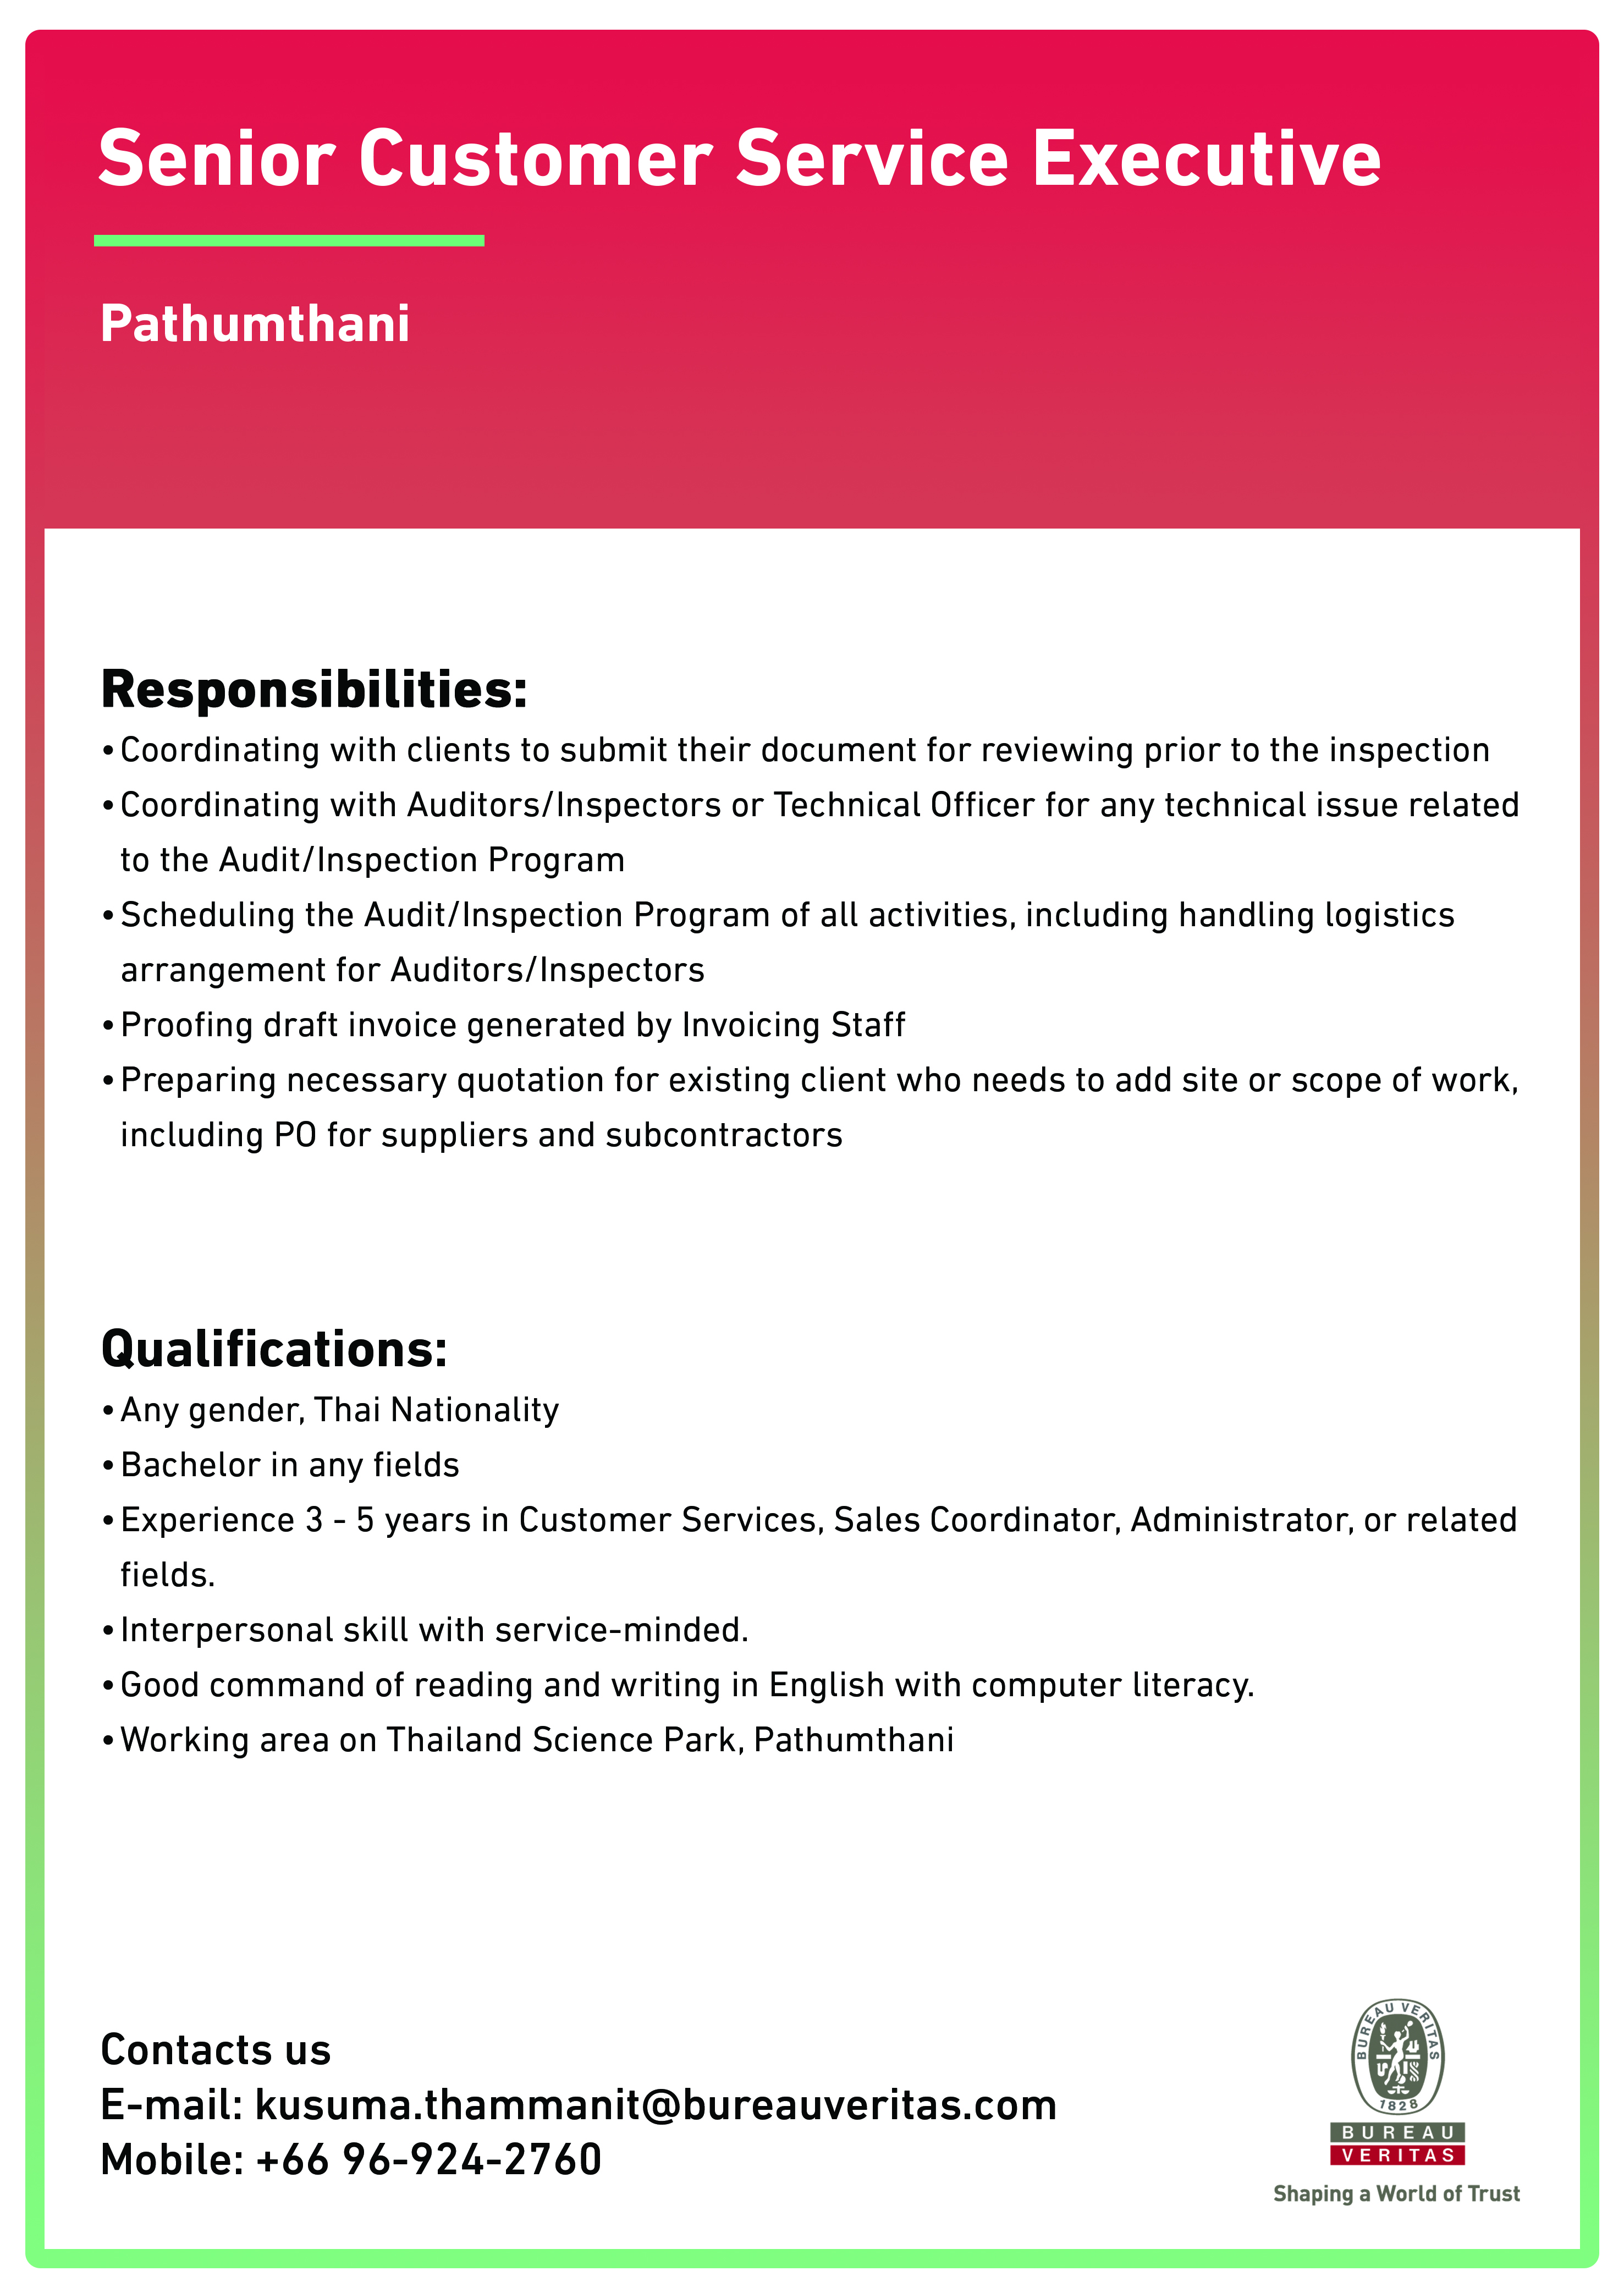 BV job offer - Senior Customer Service Executive (Pathumthani)